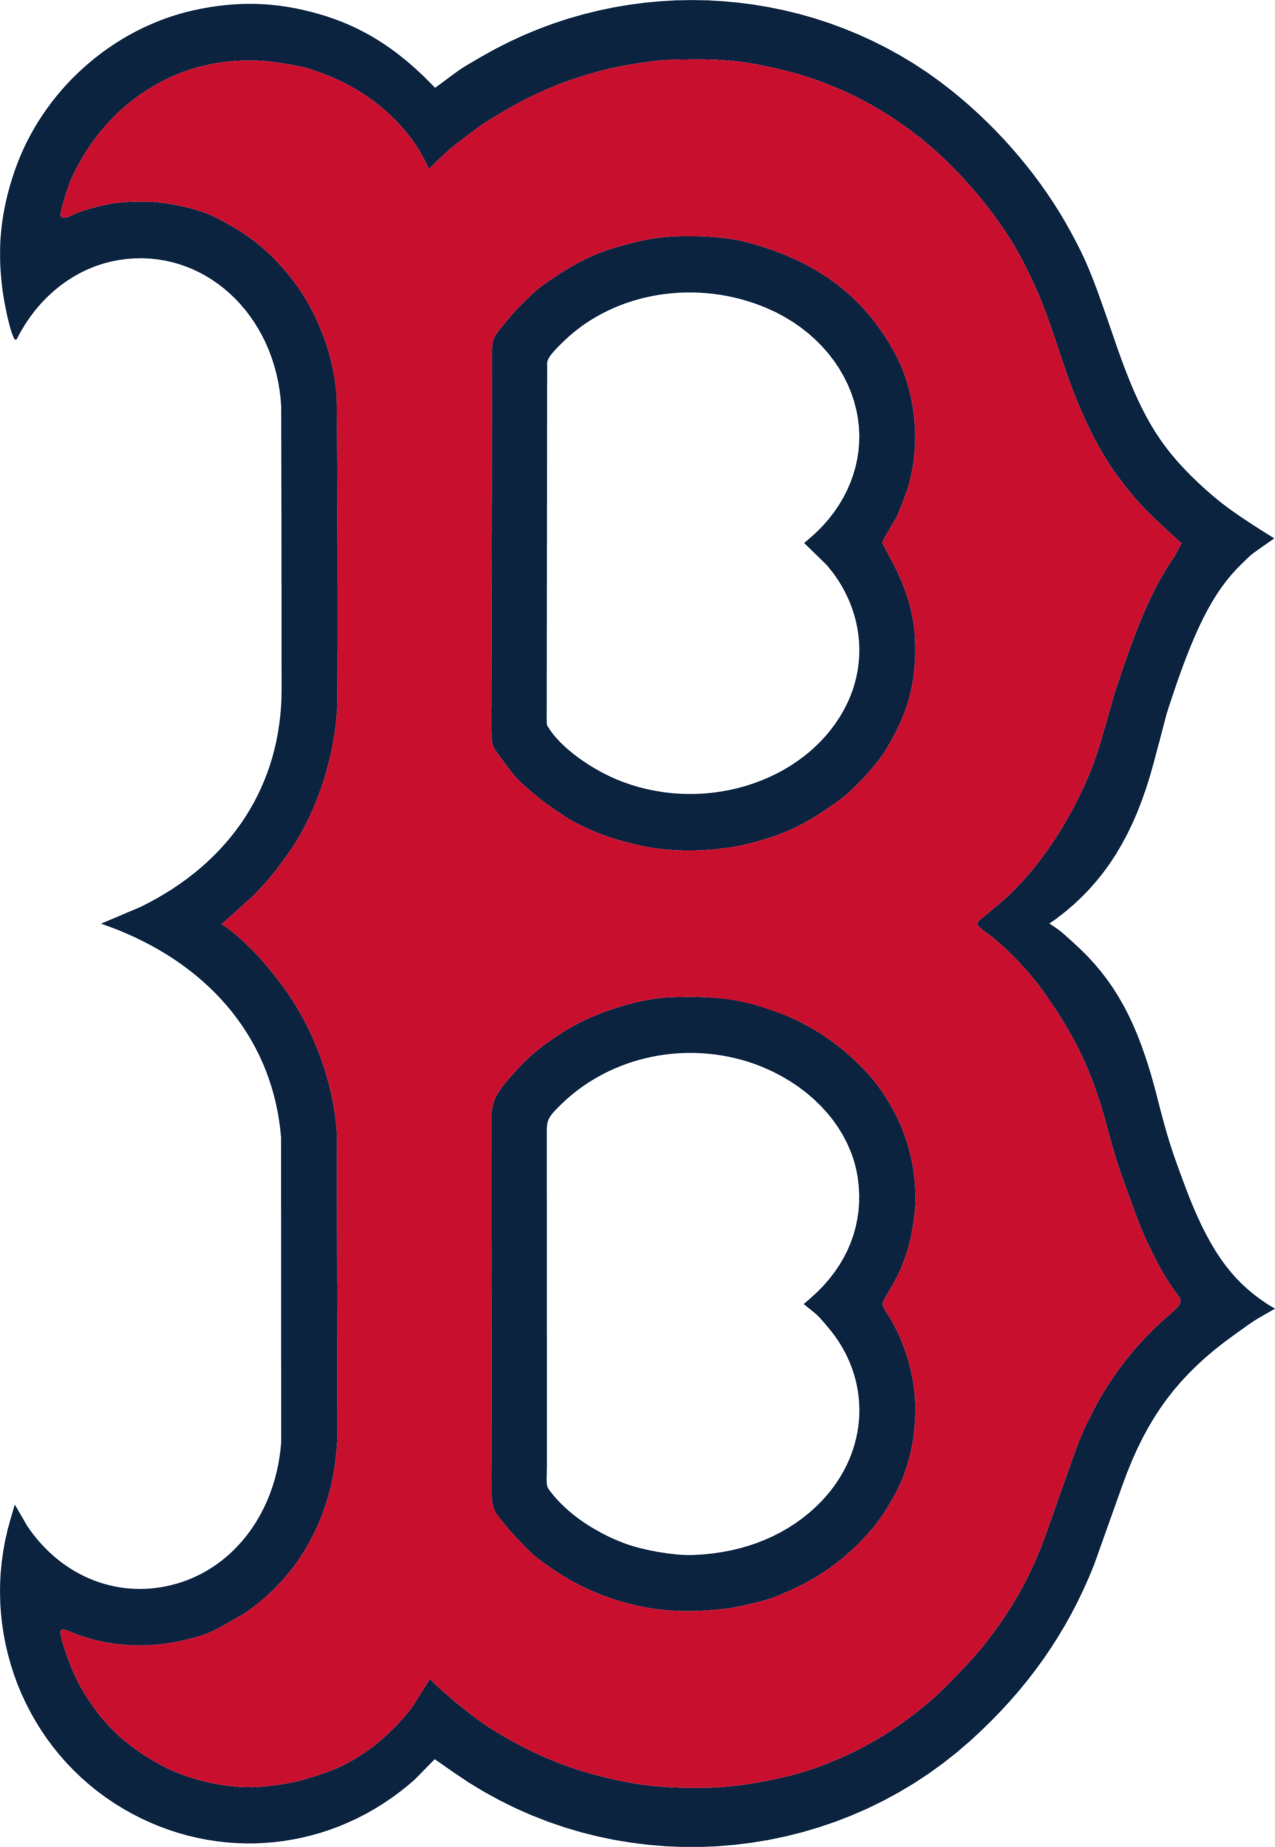 bostonredsox,红袜队,标识